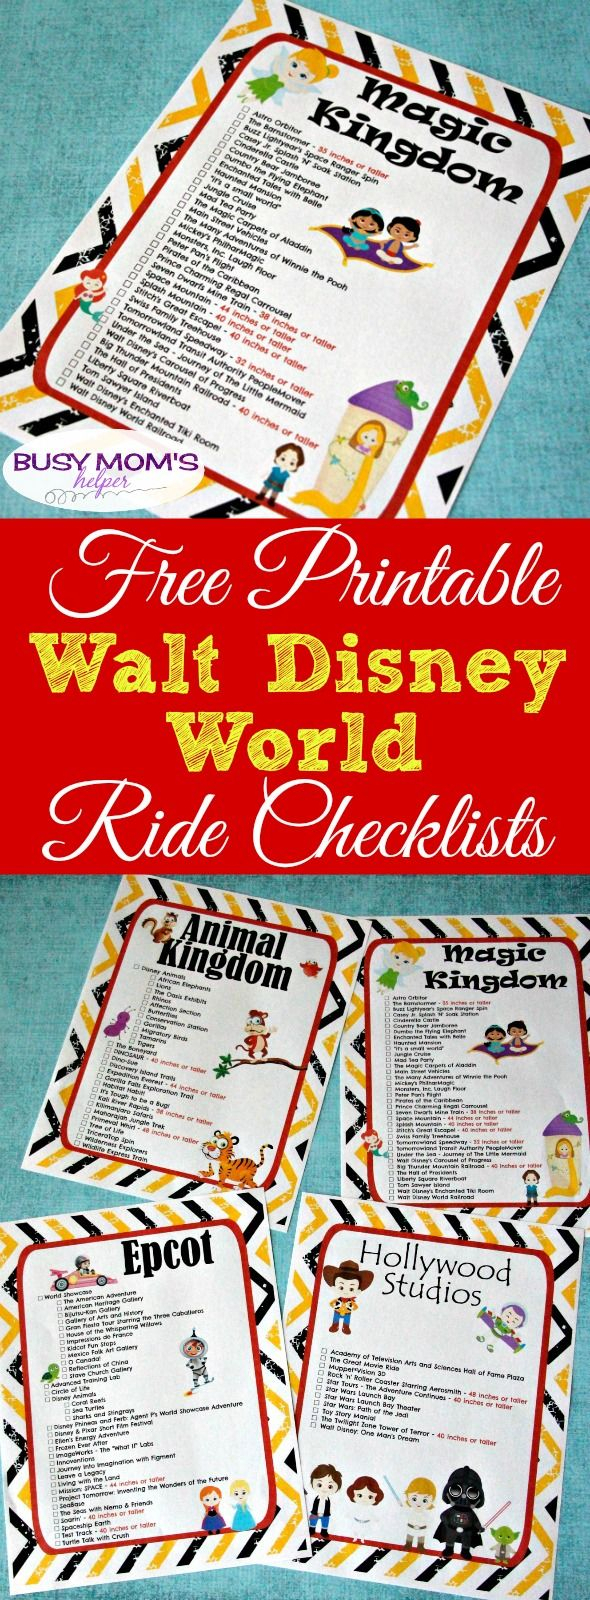 Free Printable Walt Disney World Ride Checklists | Disney